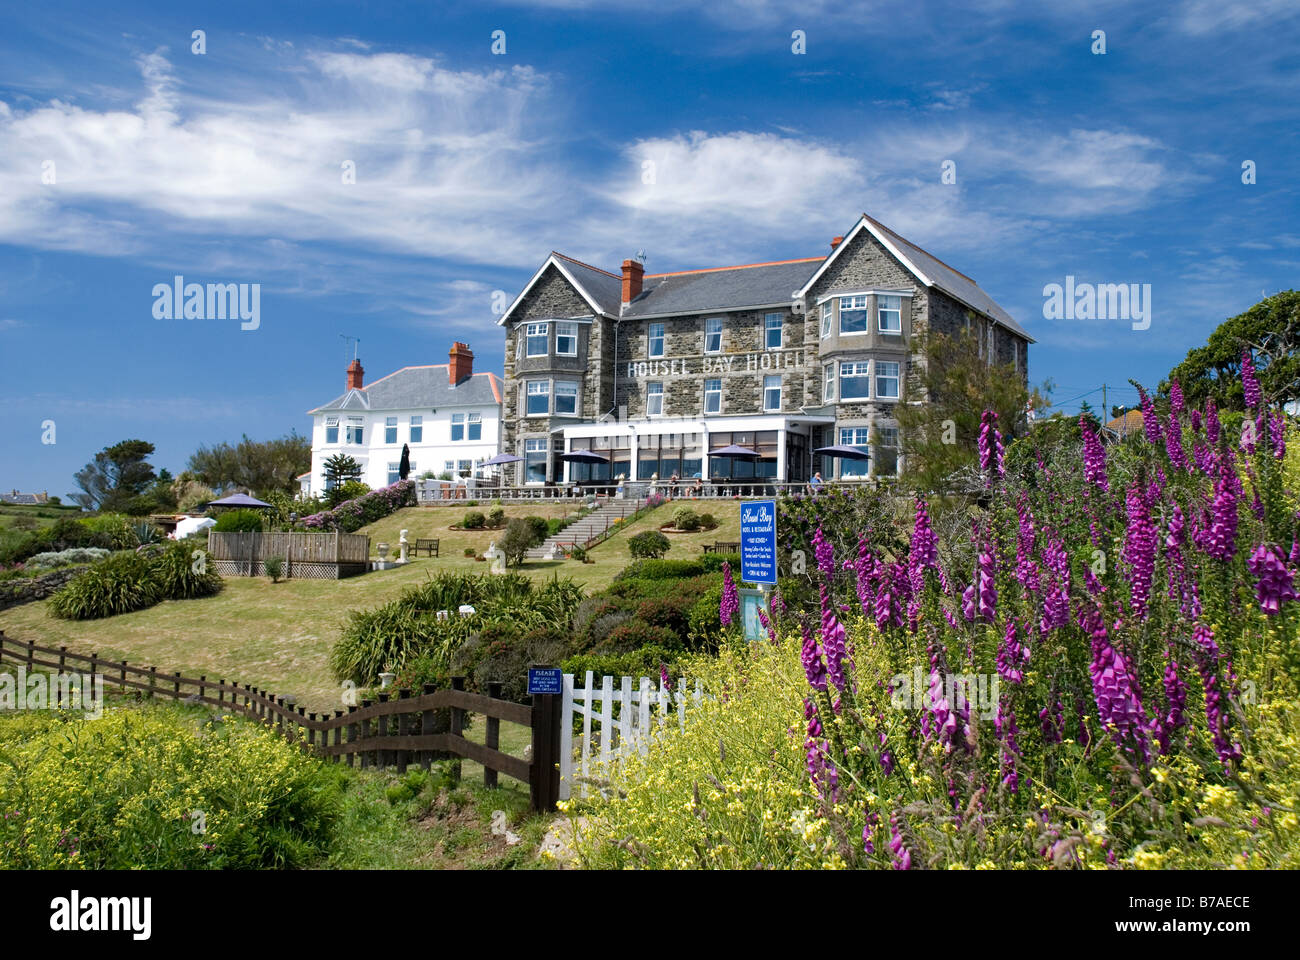 Housel Bay Hotel from coastpath, The Lizard, Cornwall UK Stock Photo